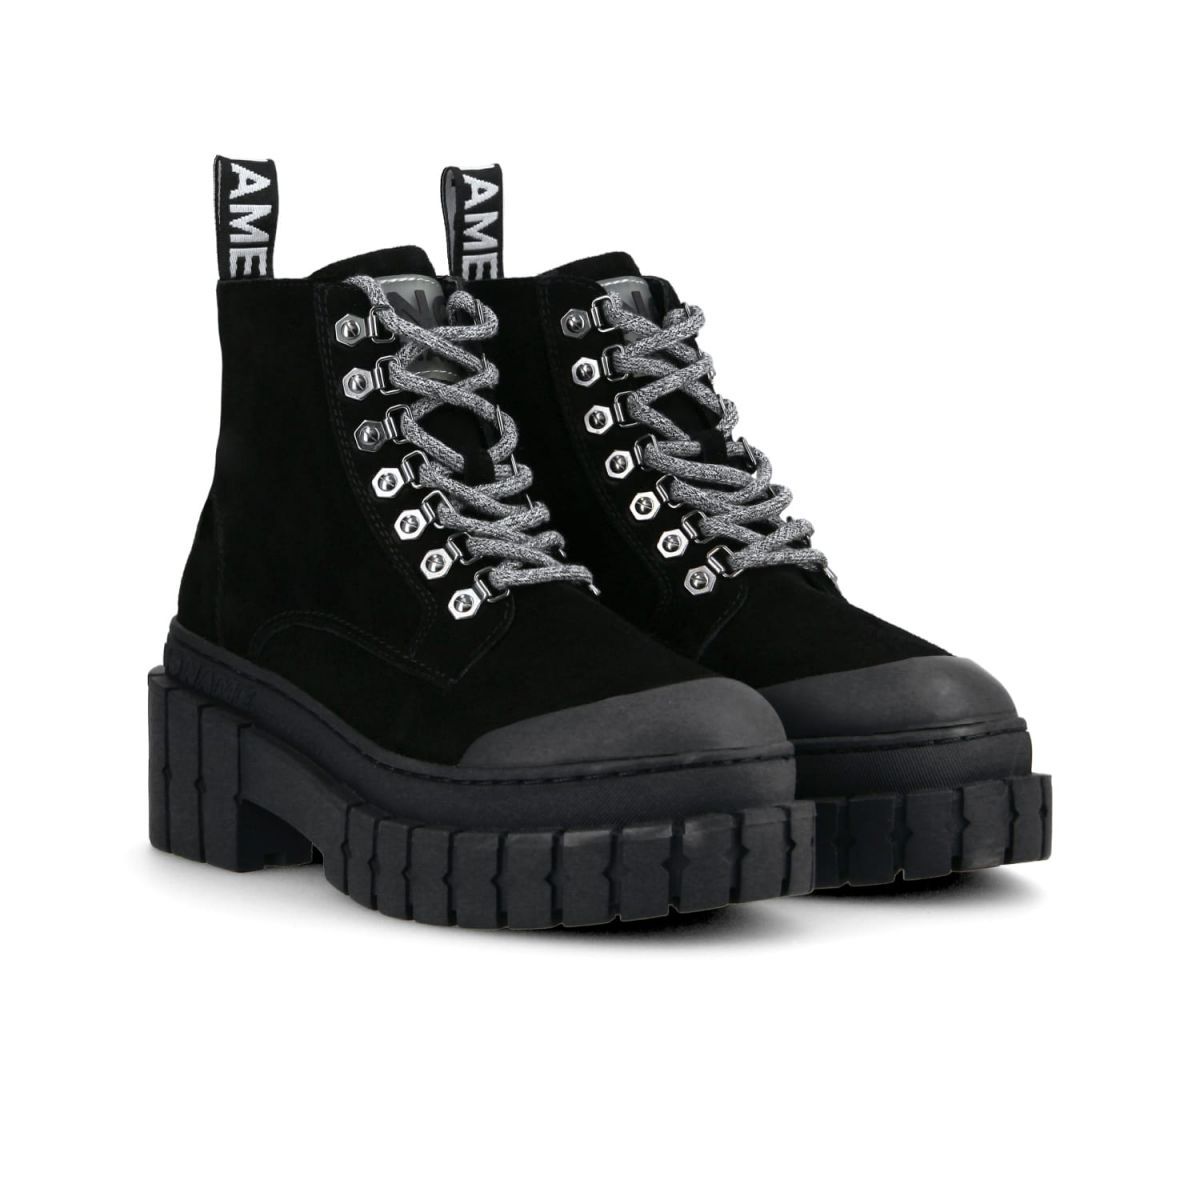 Kross Low Suede Black Boots KNXEVS0415 - 2